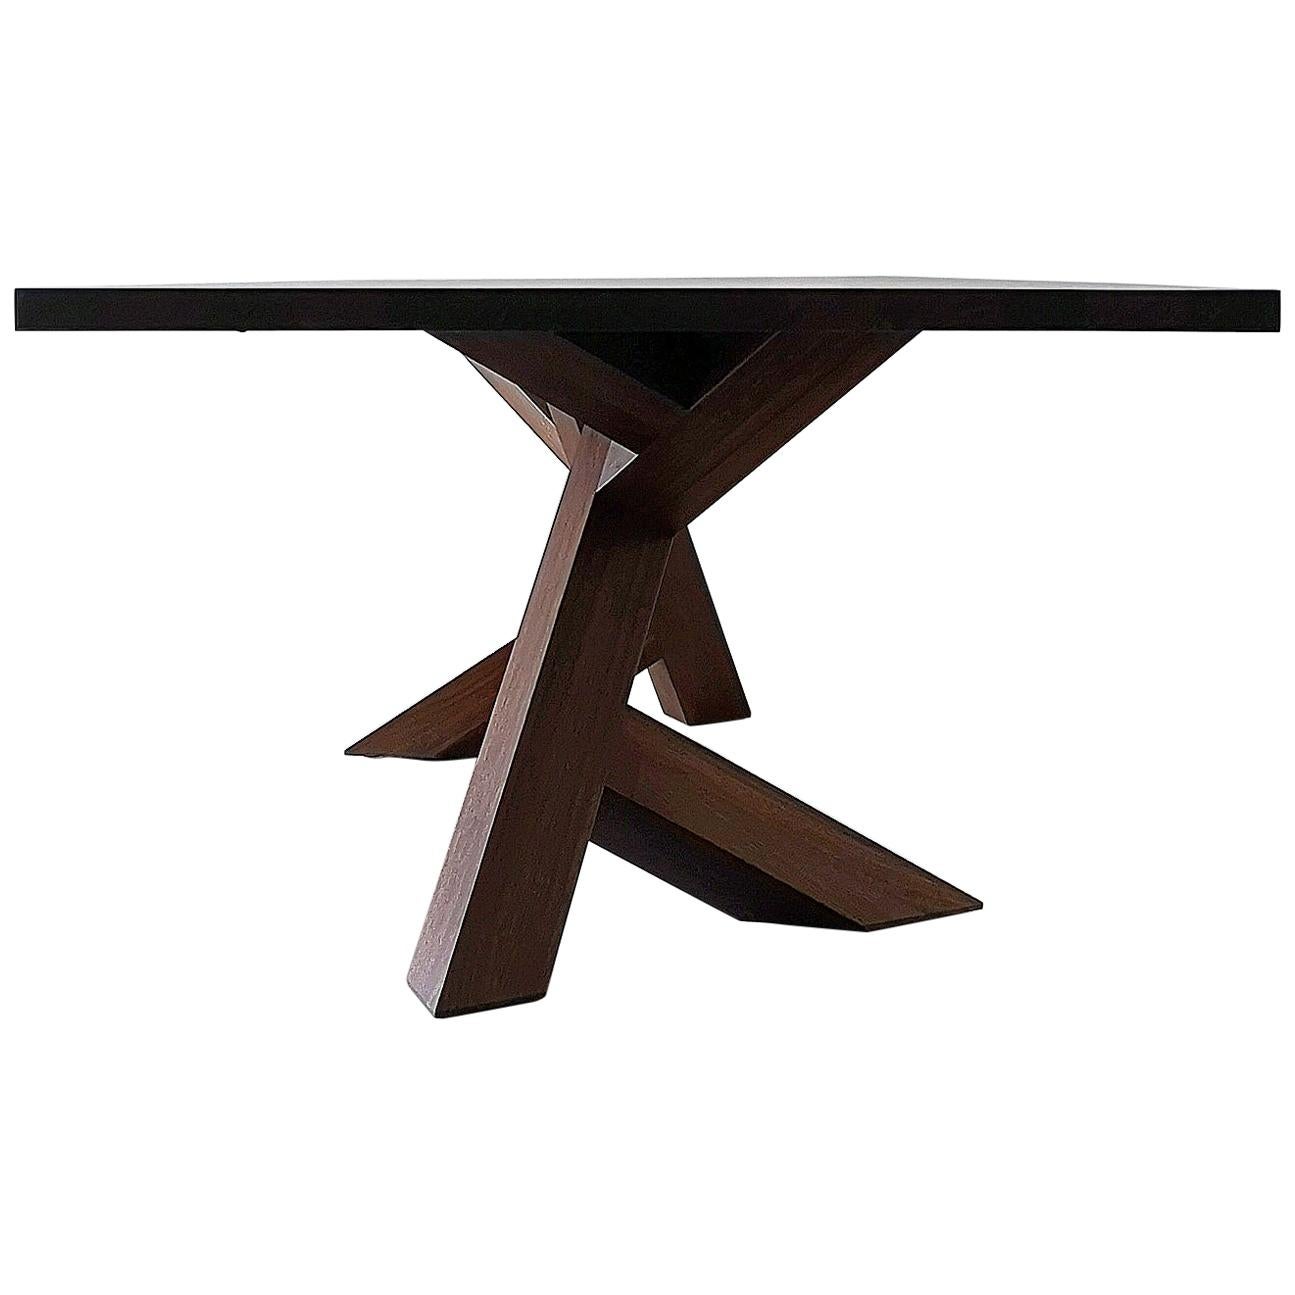 Canadian Iconoclast Modern Hardwood Dining Table by Izm Design